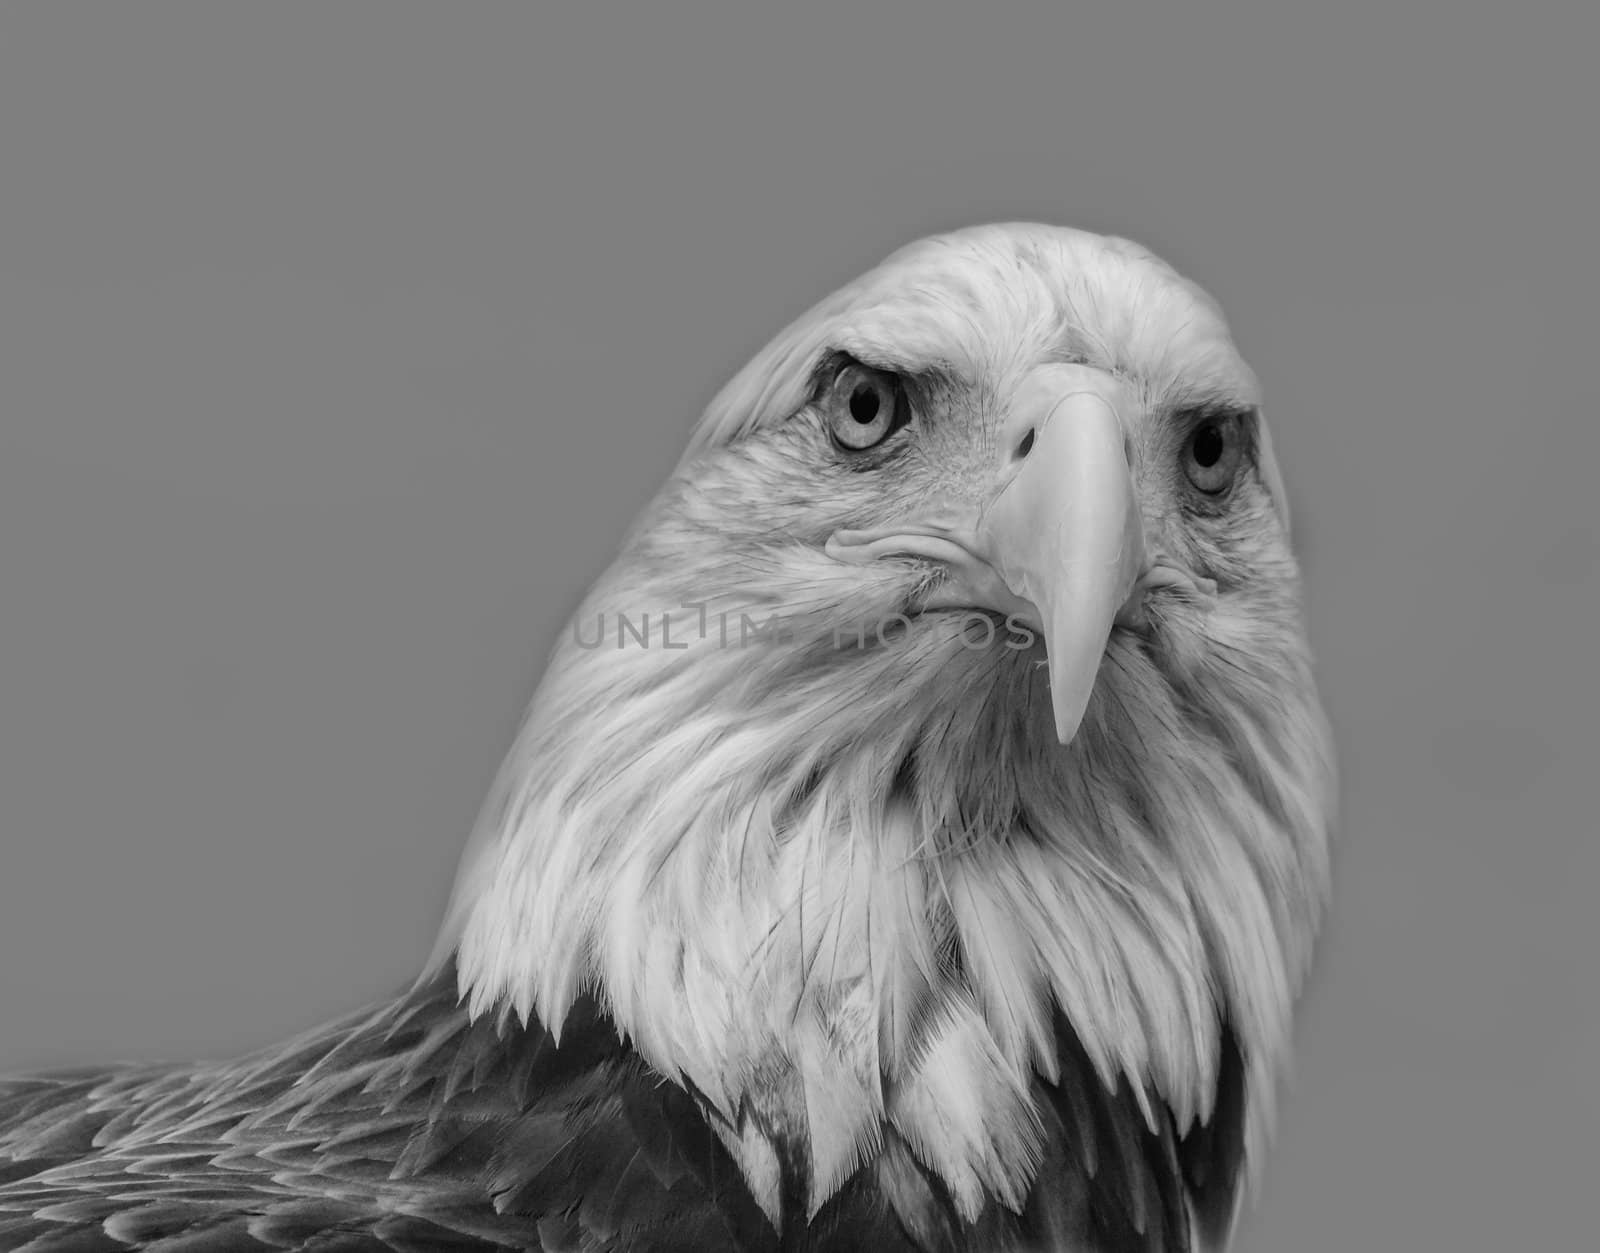 An American Bald Eagle stands vigil.